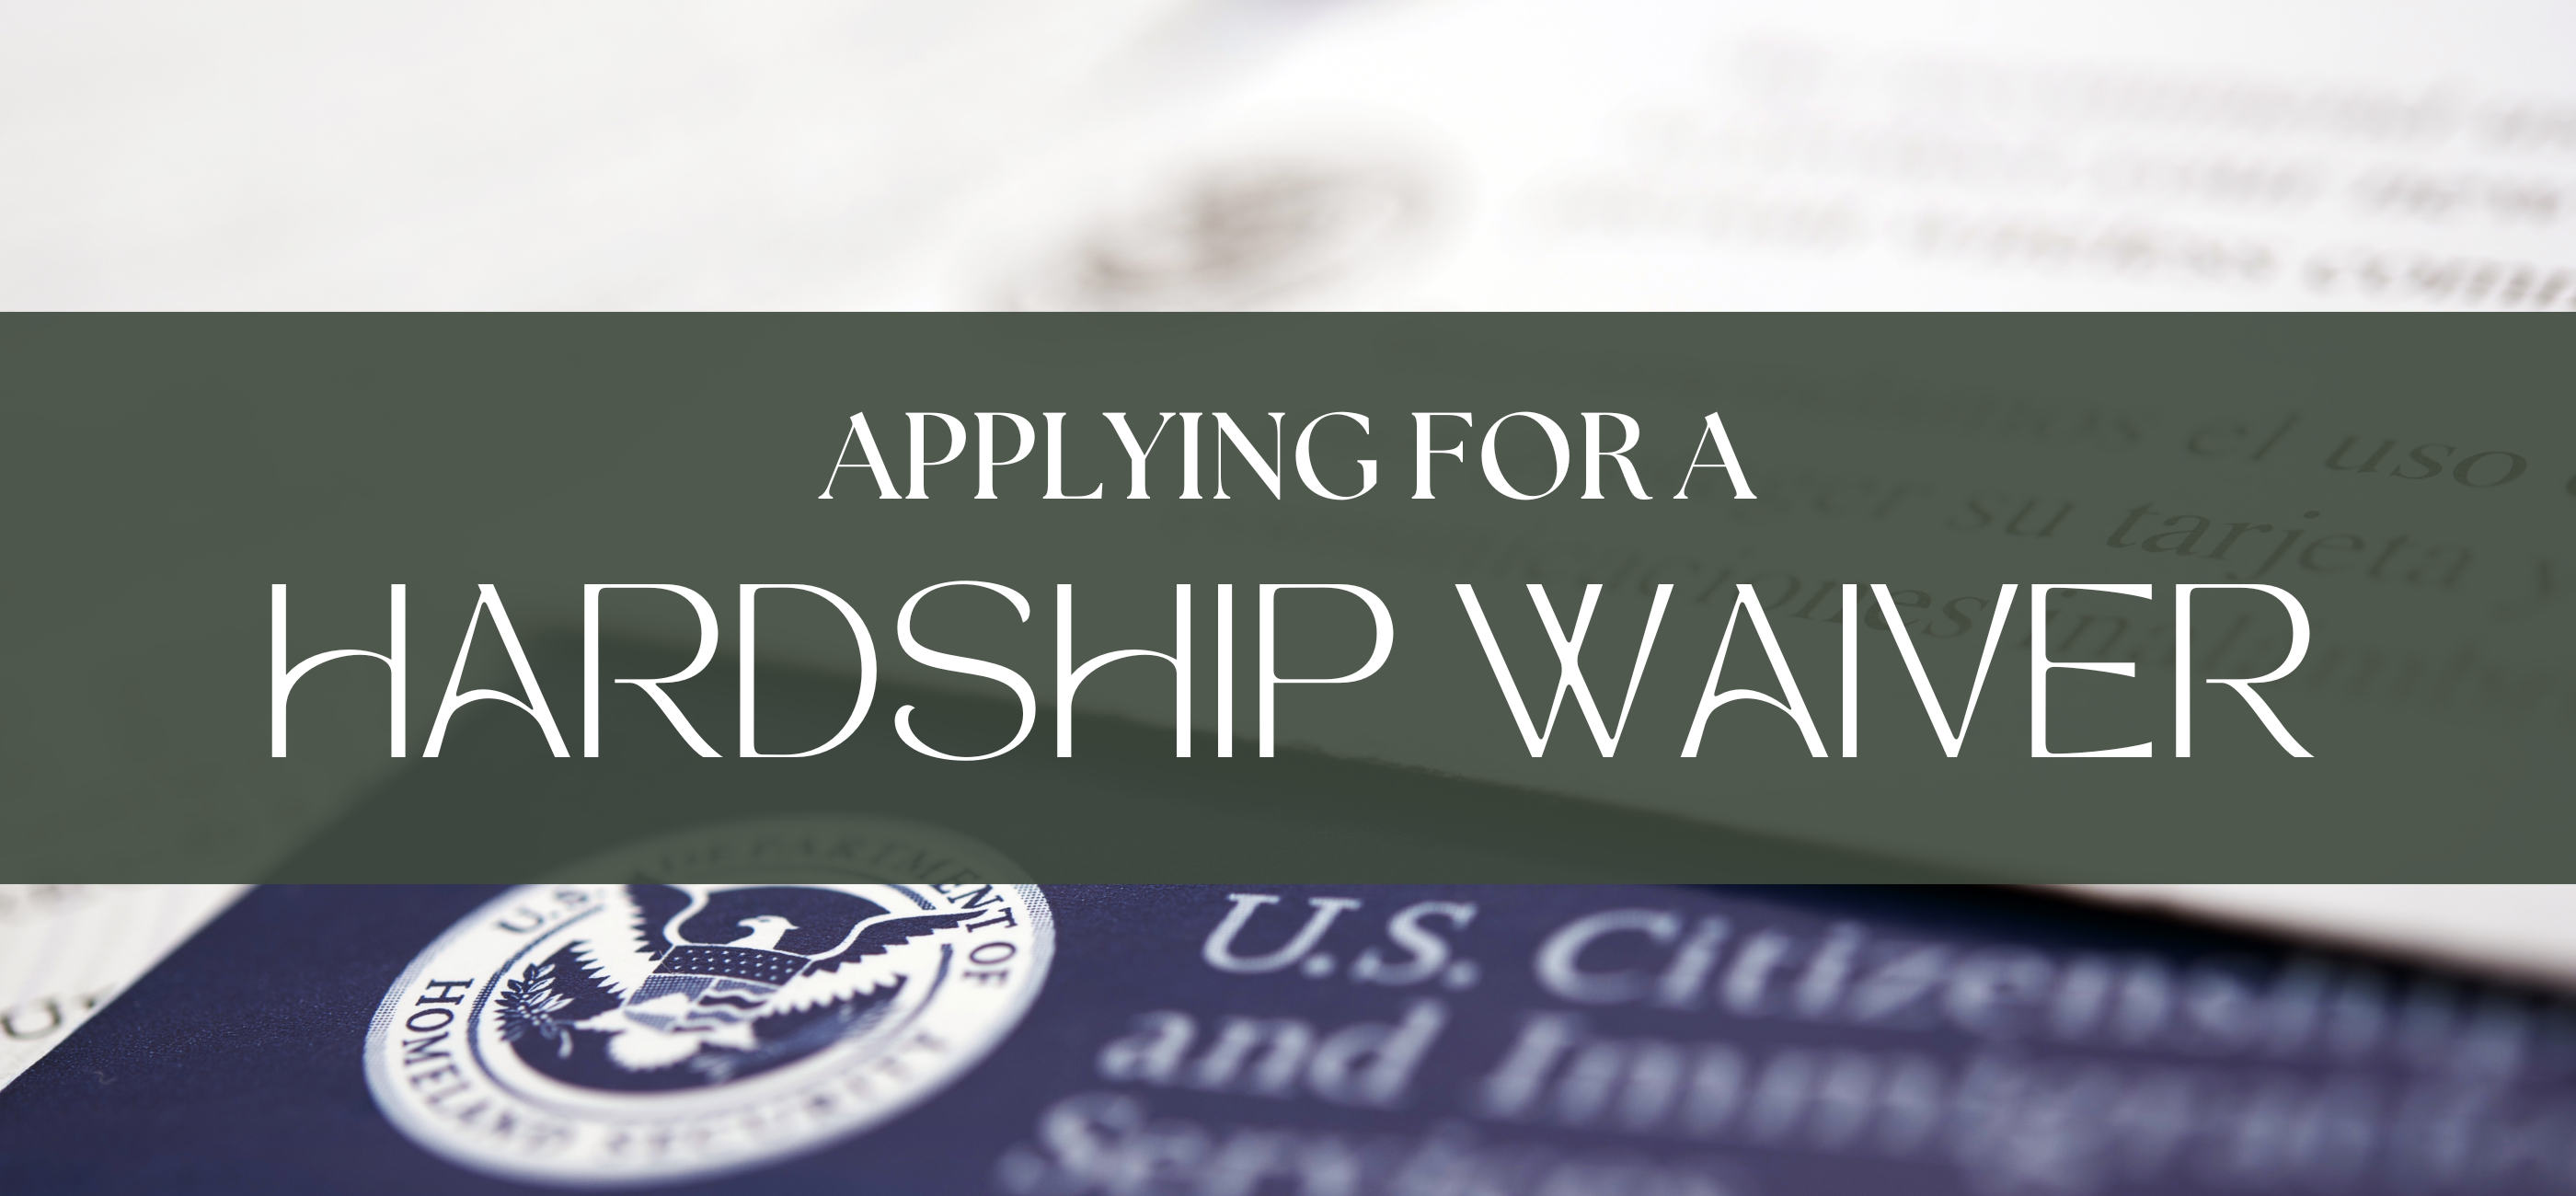 Applying for hardship waiver - Blog cover (1)